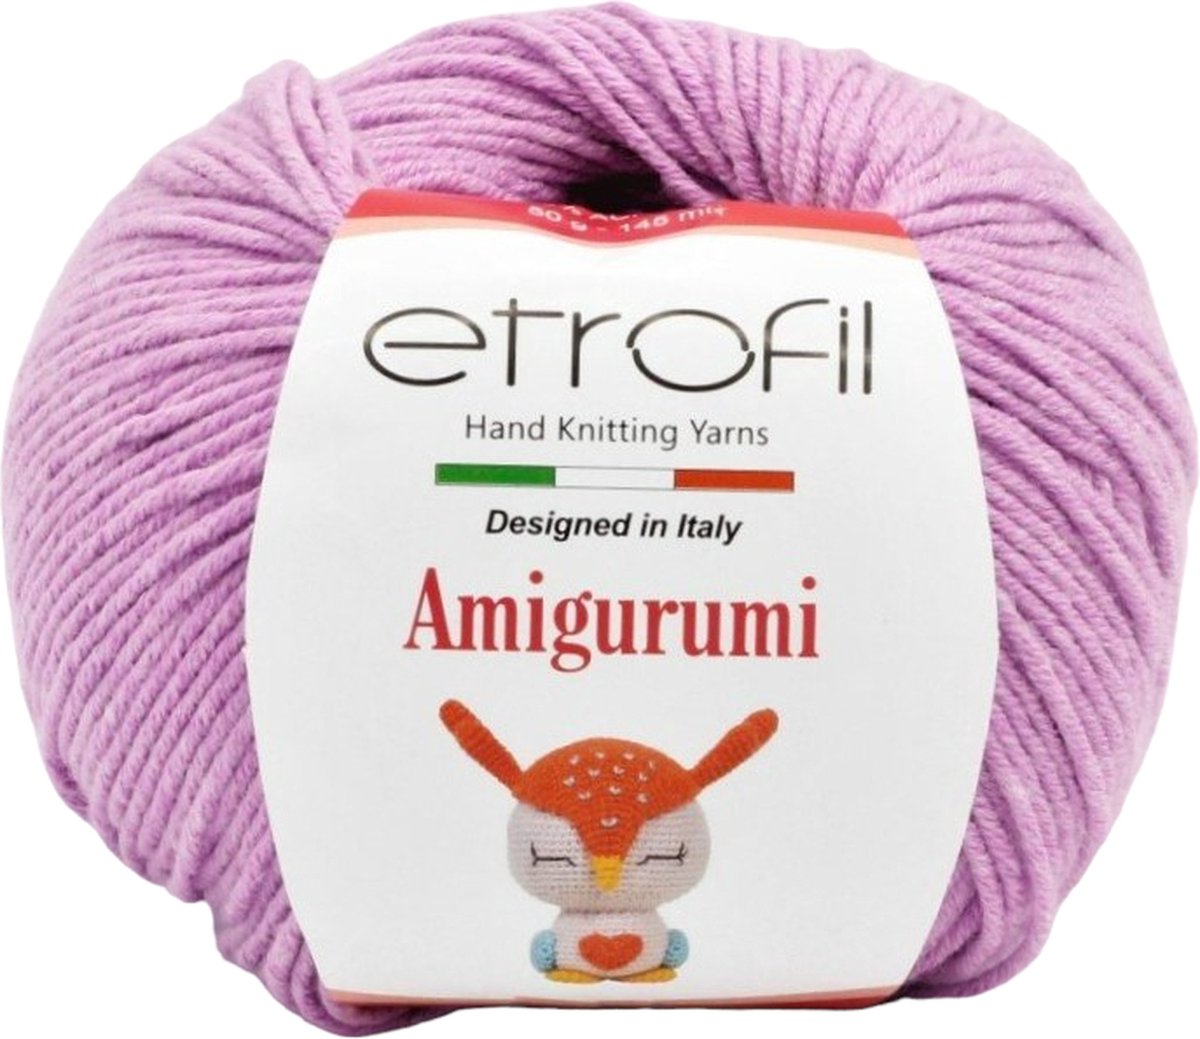 Etrofil Amigurumi Fils à coudre- Lilas crochet coton - amigurumi - crochet  - tricot 